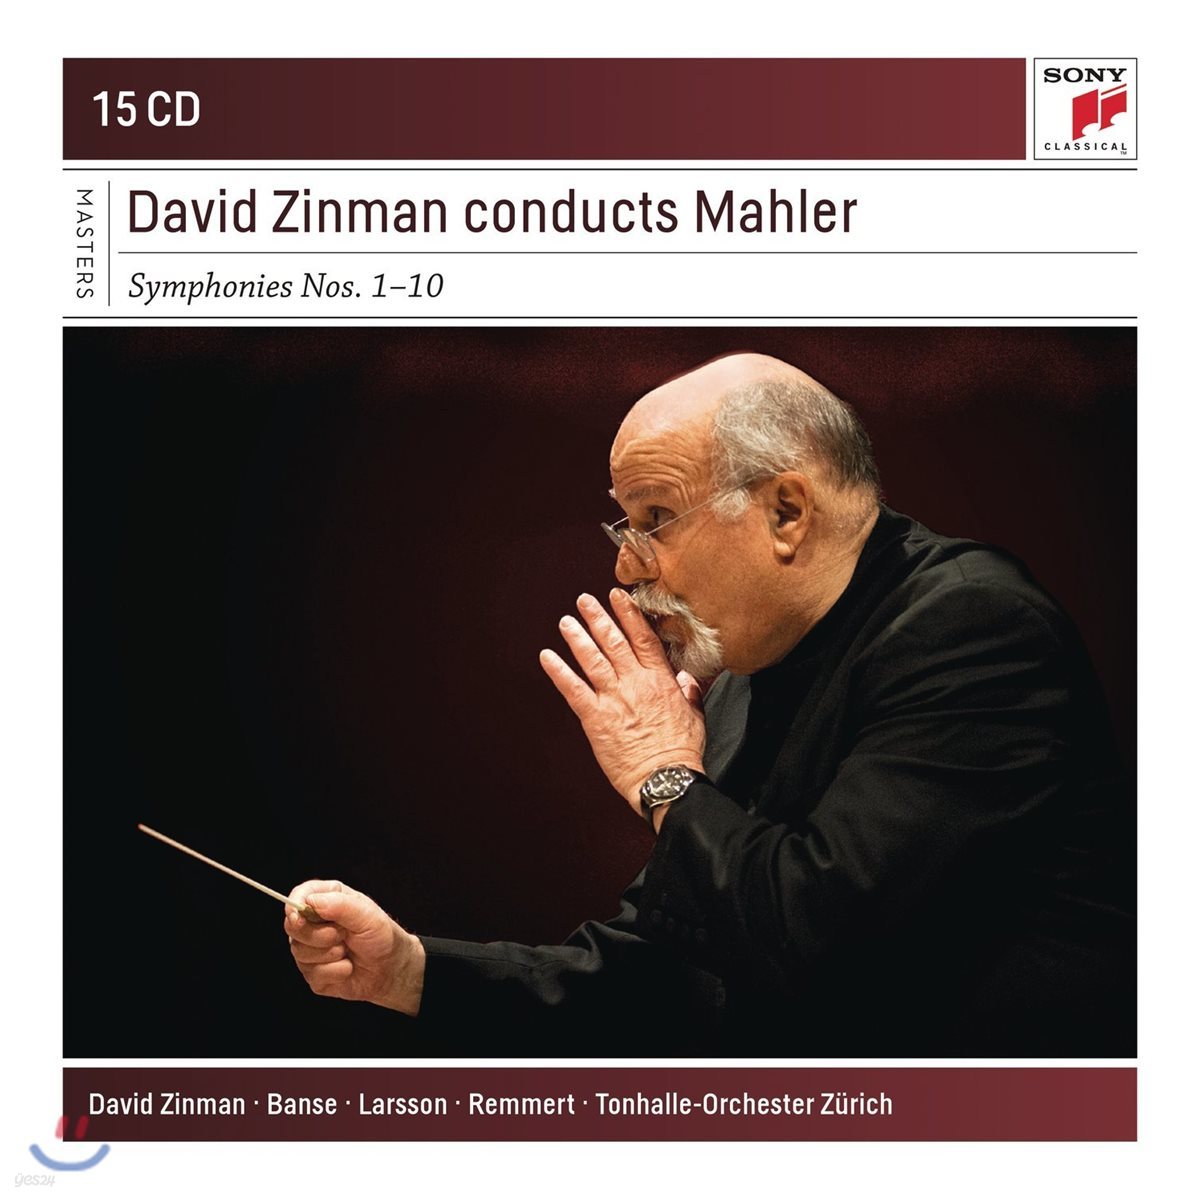 David Zinman 데이비드 진먼이 지휘하는 말러 교향곡 1-10번 전집 (Mahler: The Complete Symphonies)